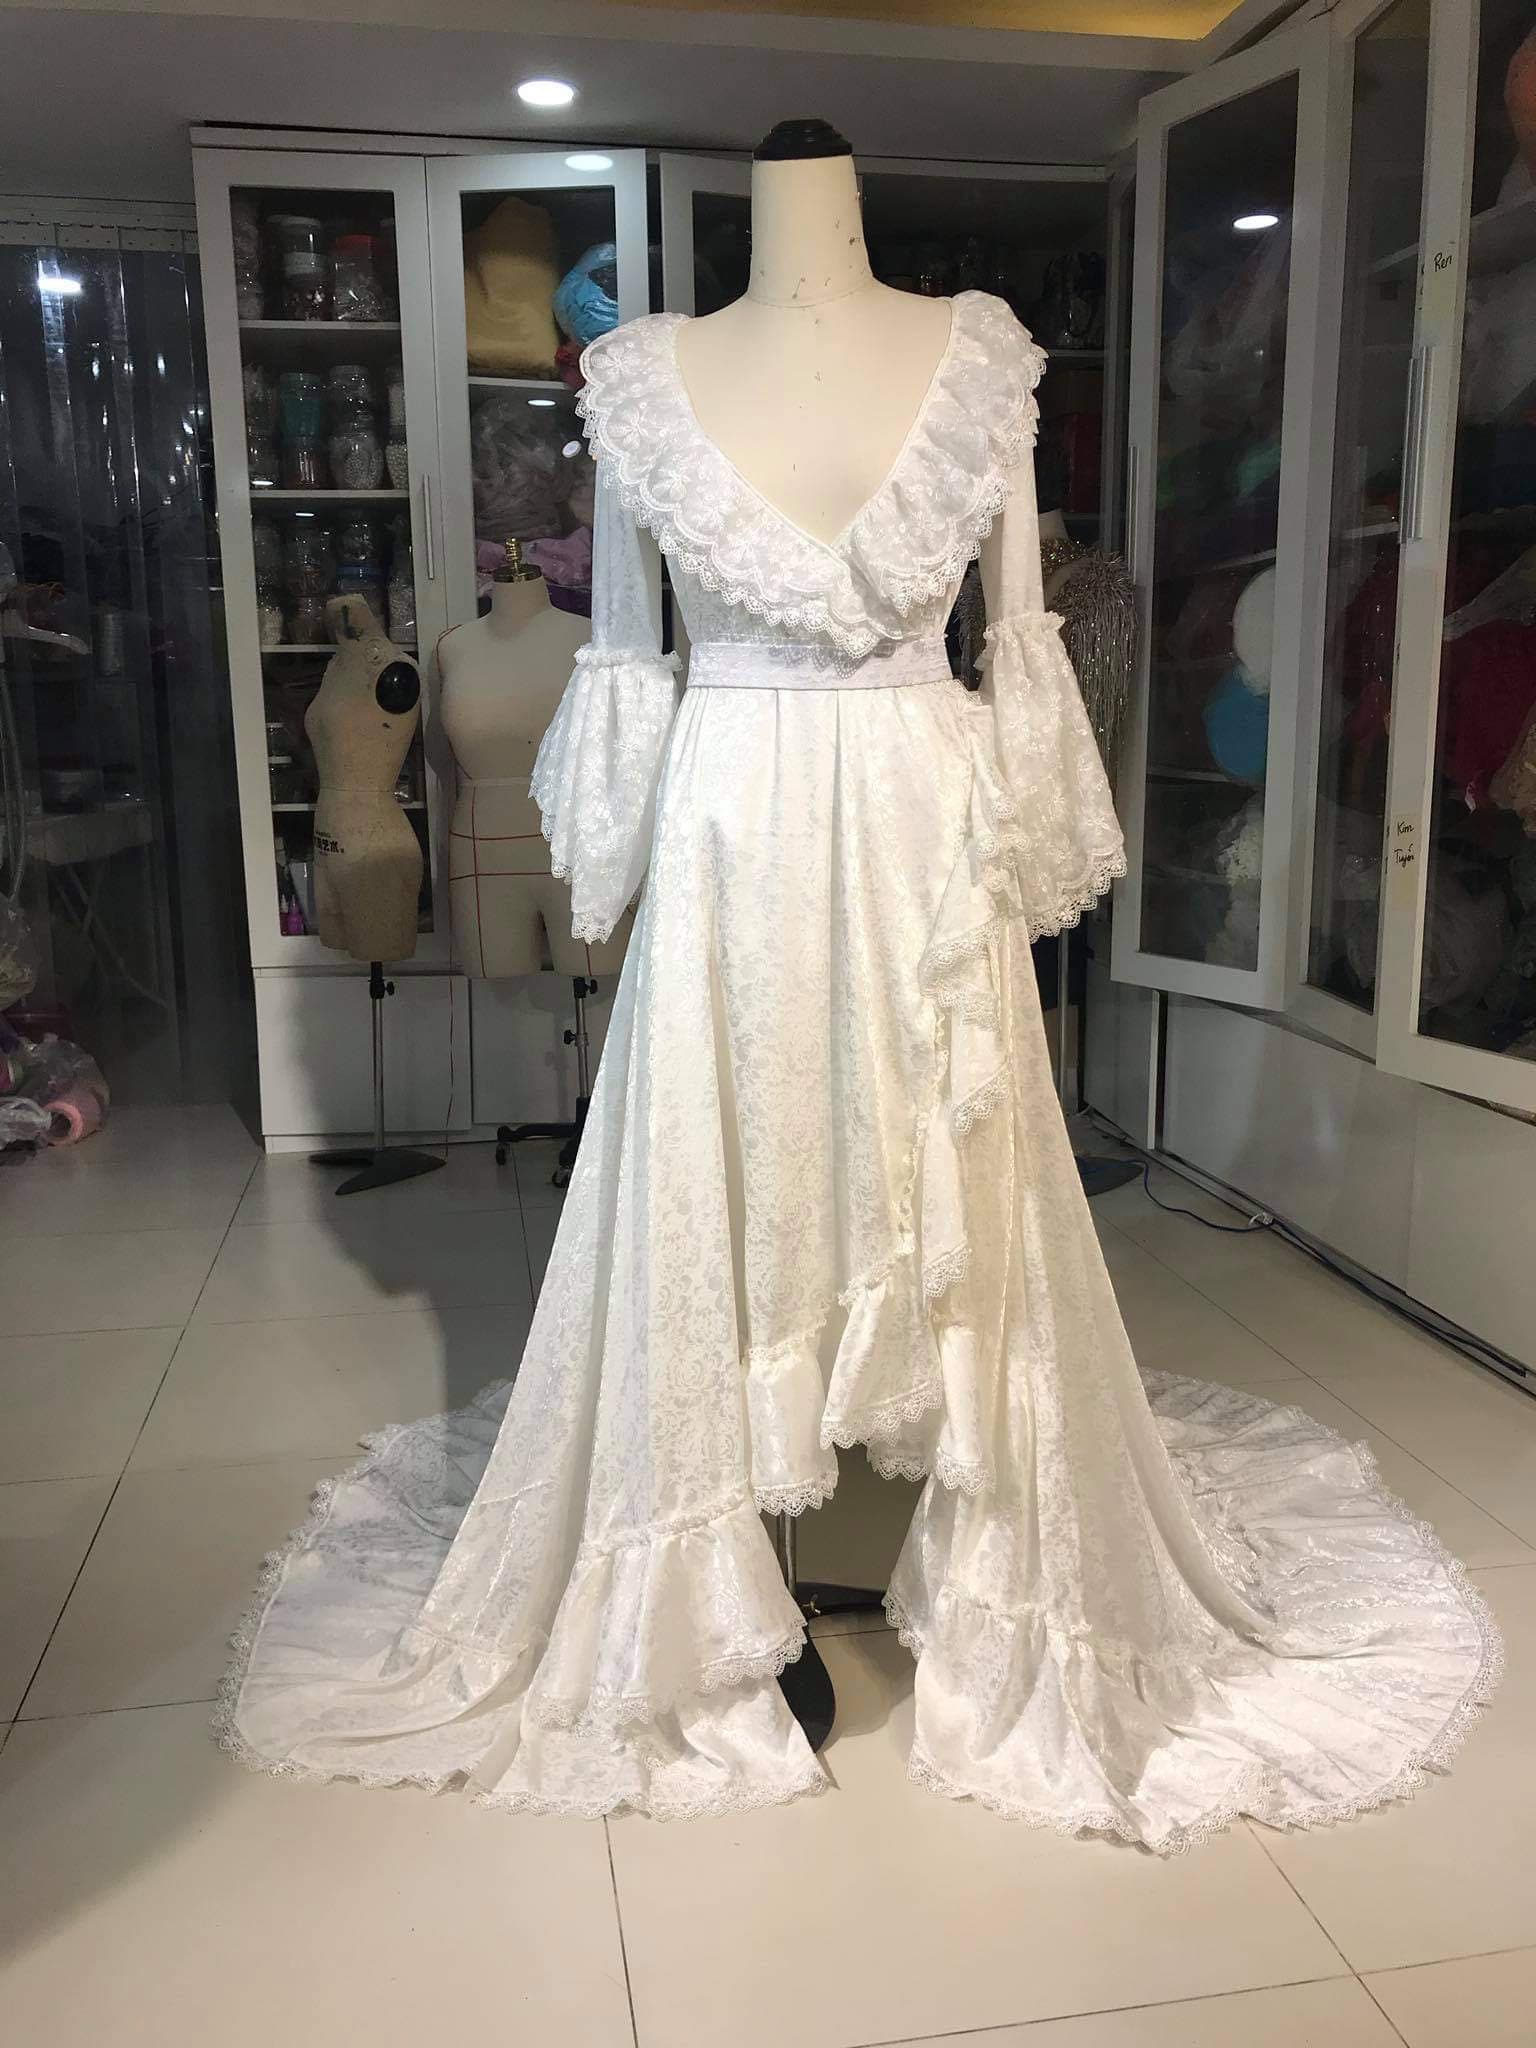 phantom of the opera dress